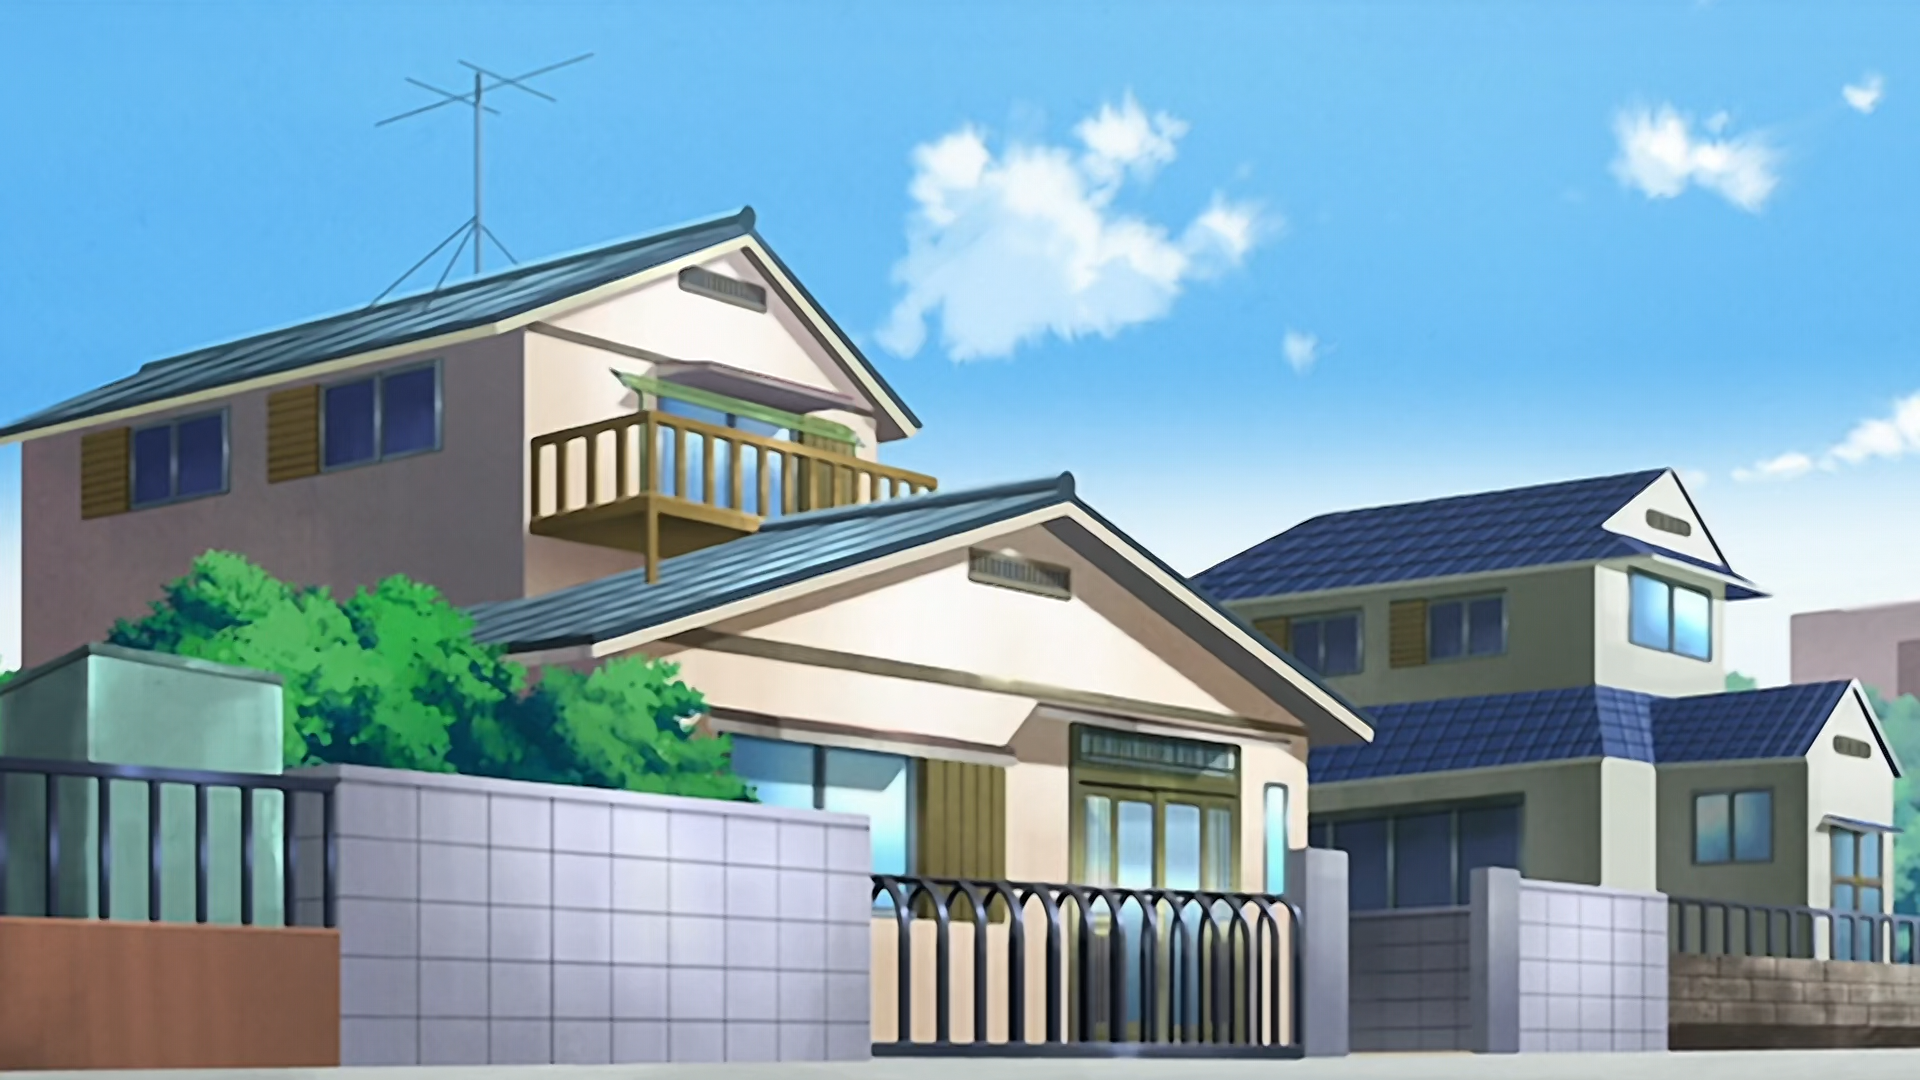 Anime House Images  Free Download on Freepik